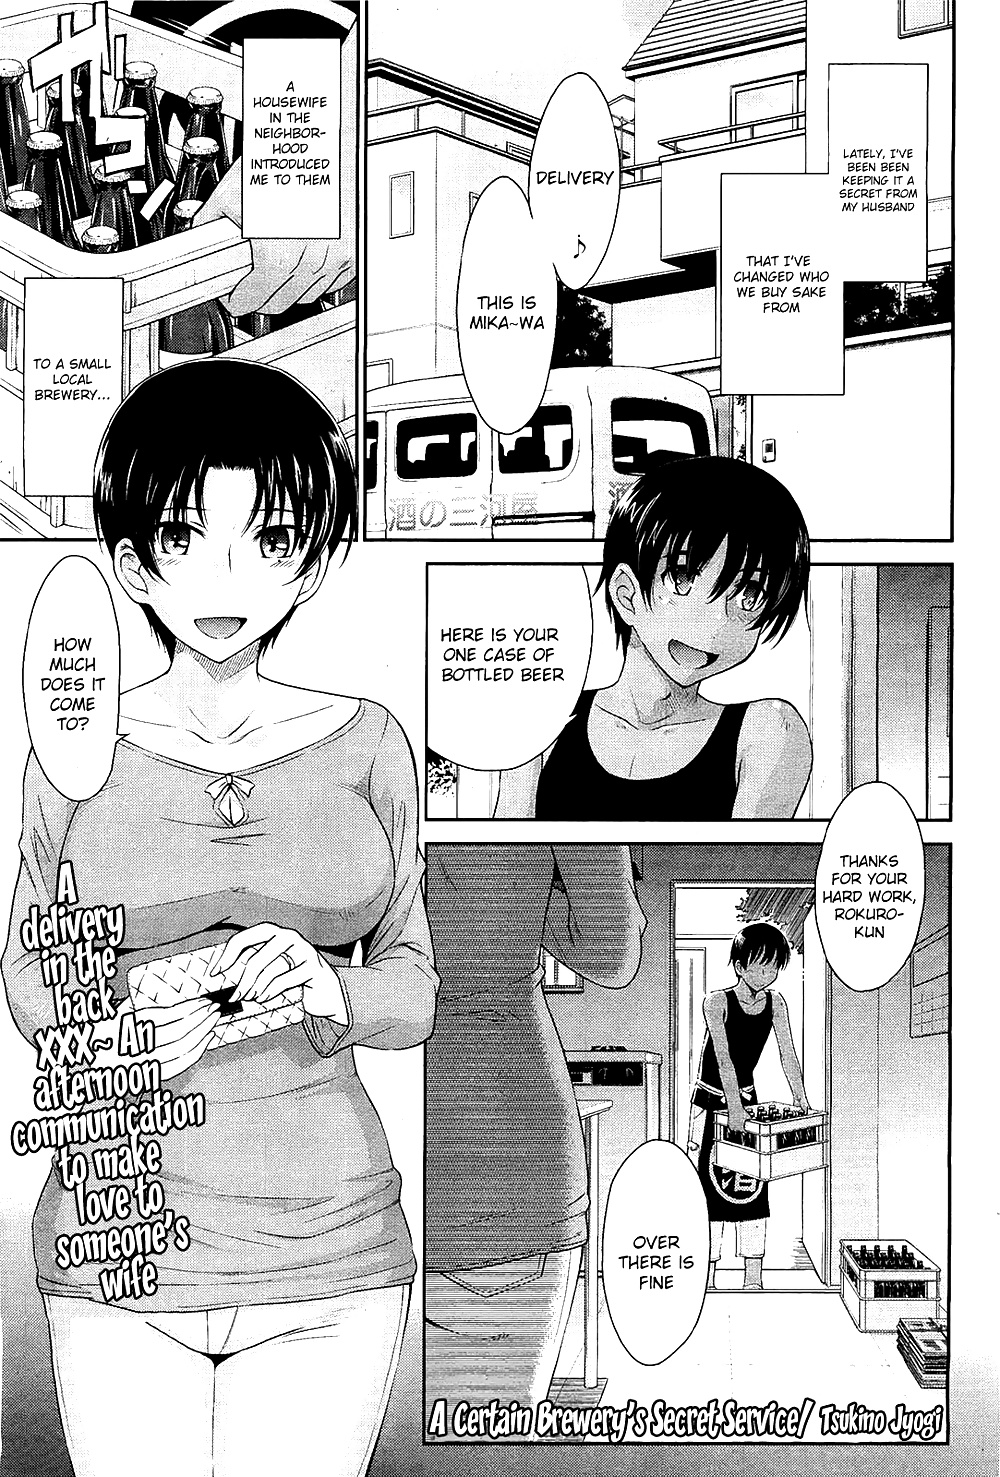 A Certain Brewery's Secret Service (Manga) #24637201